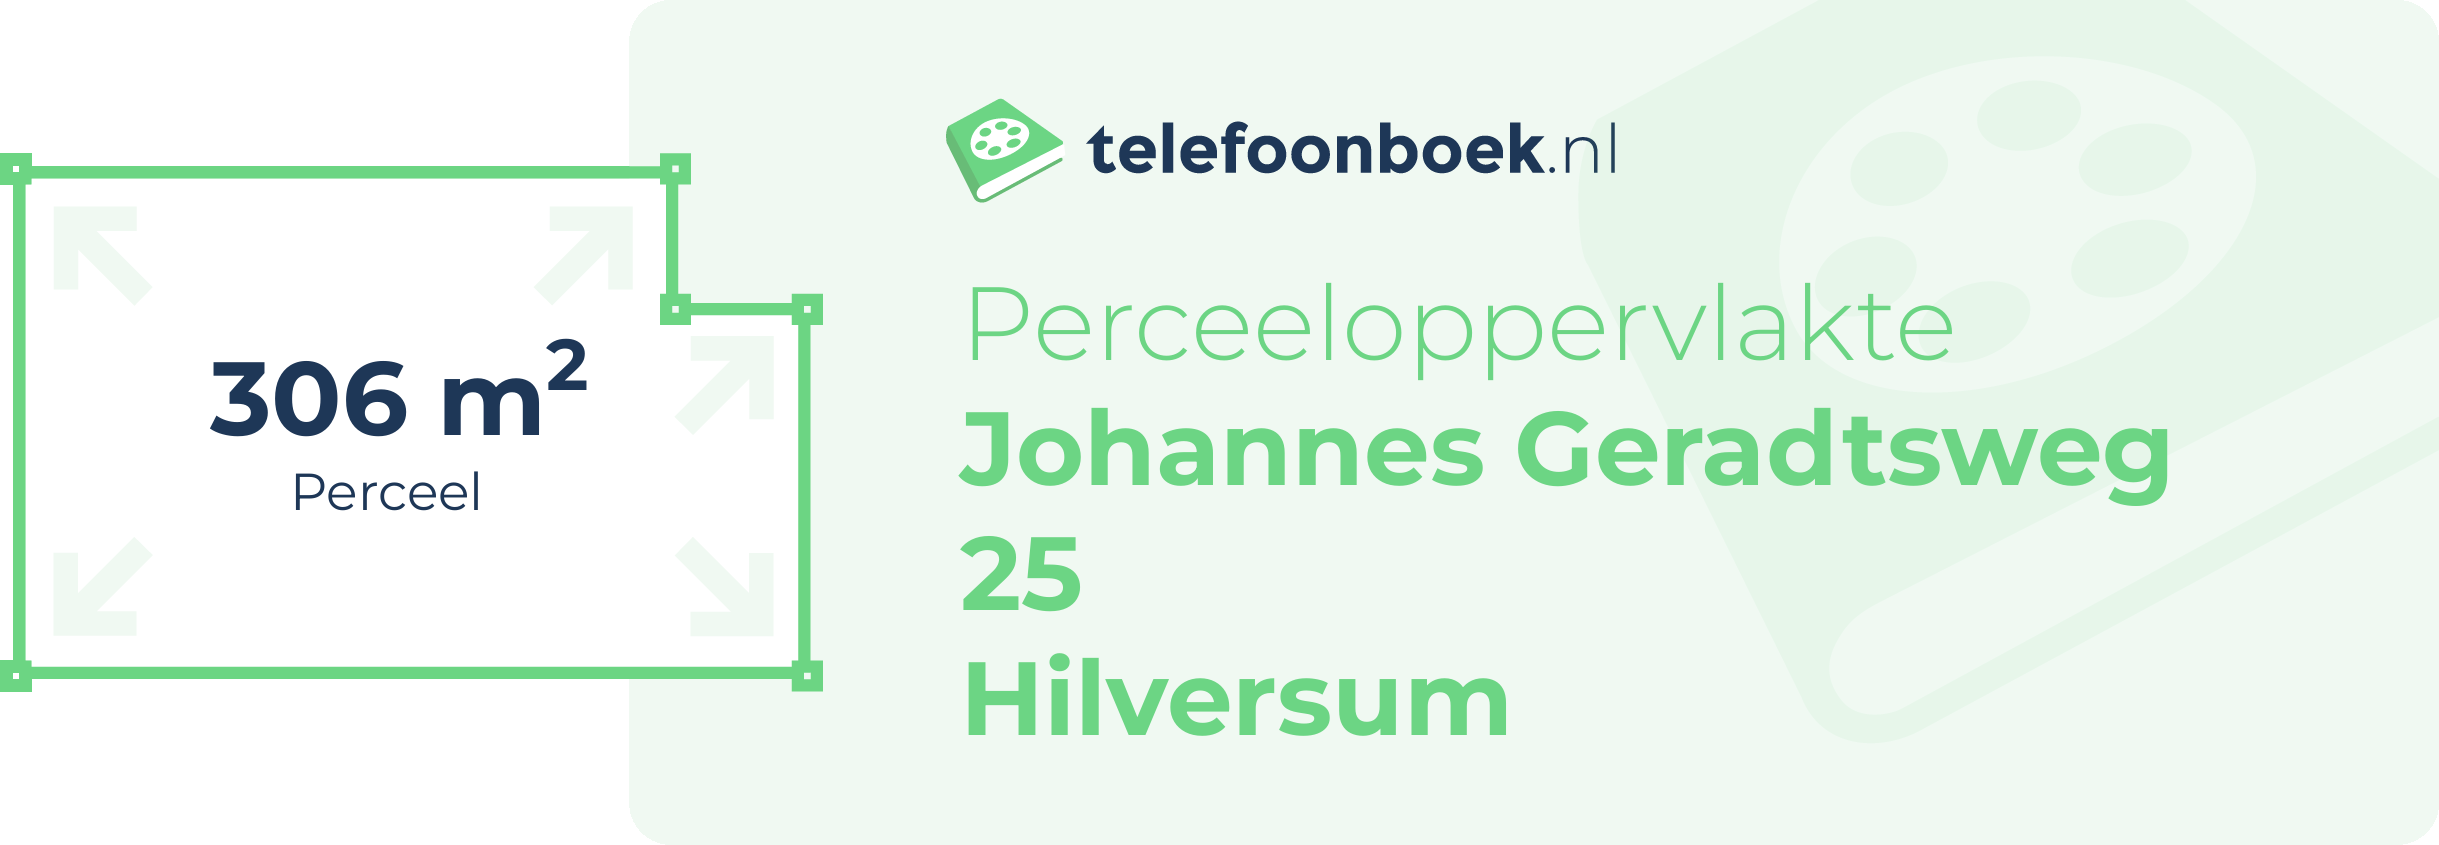 Perceeloppervlakte Johannes Geradtsweg 25 Hilversum